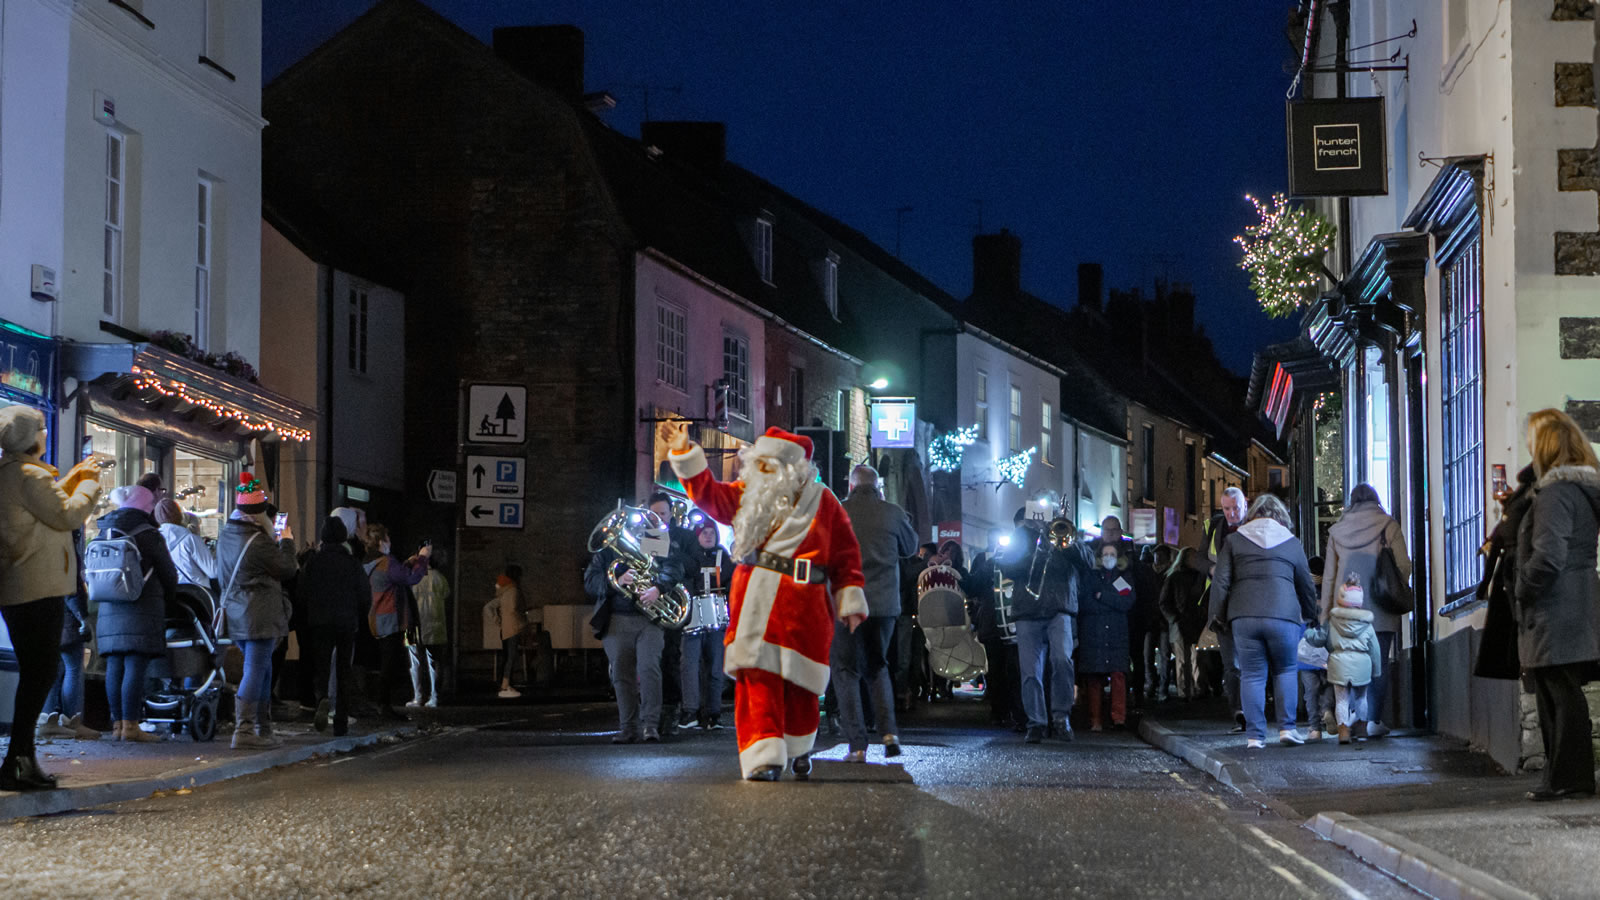 Father Christmas himself, leading Wincanton's 2021 lantern parade